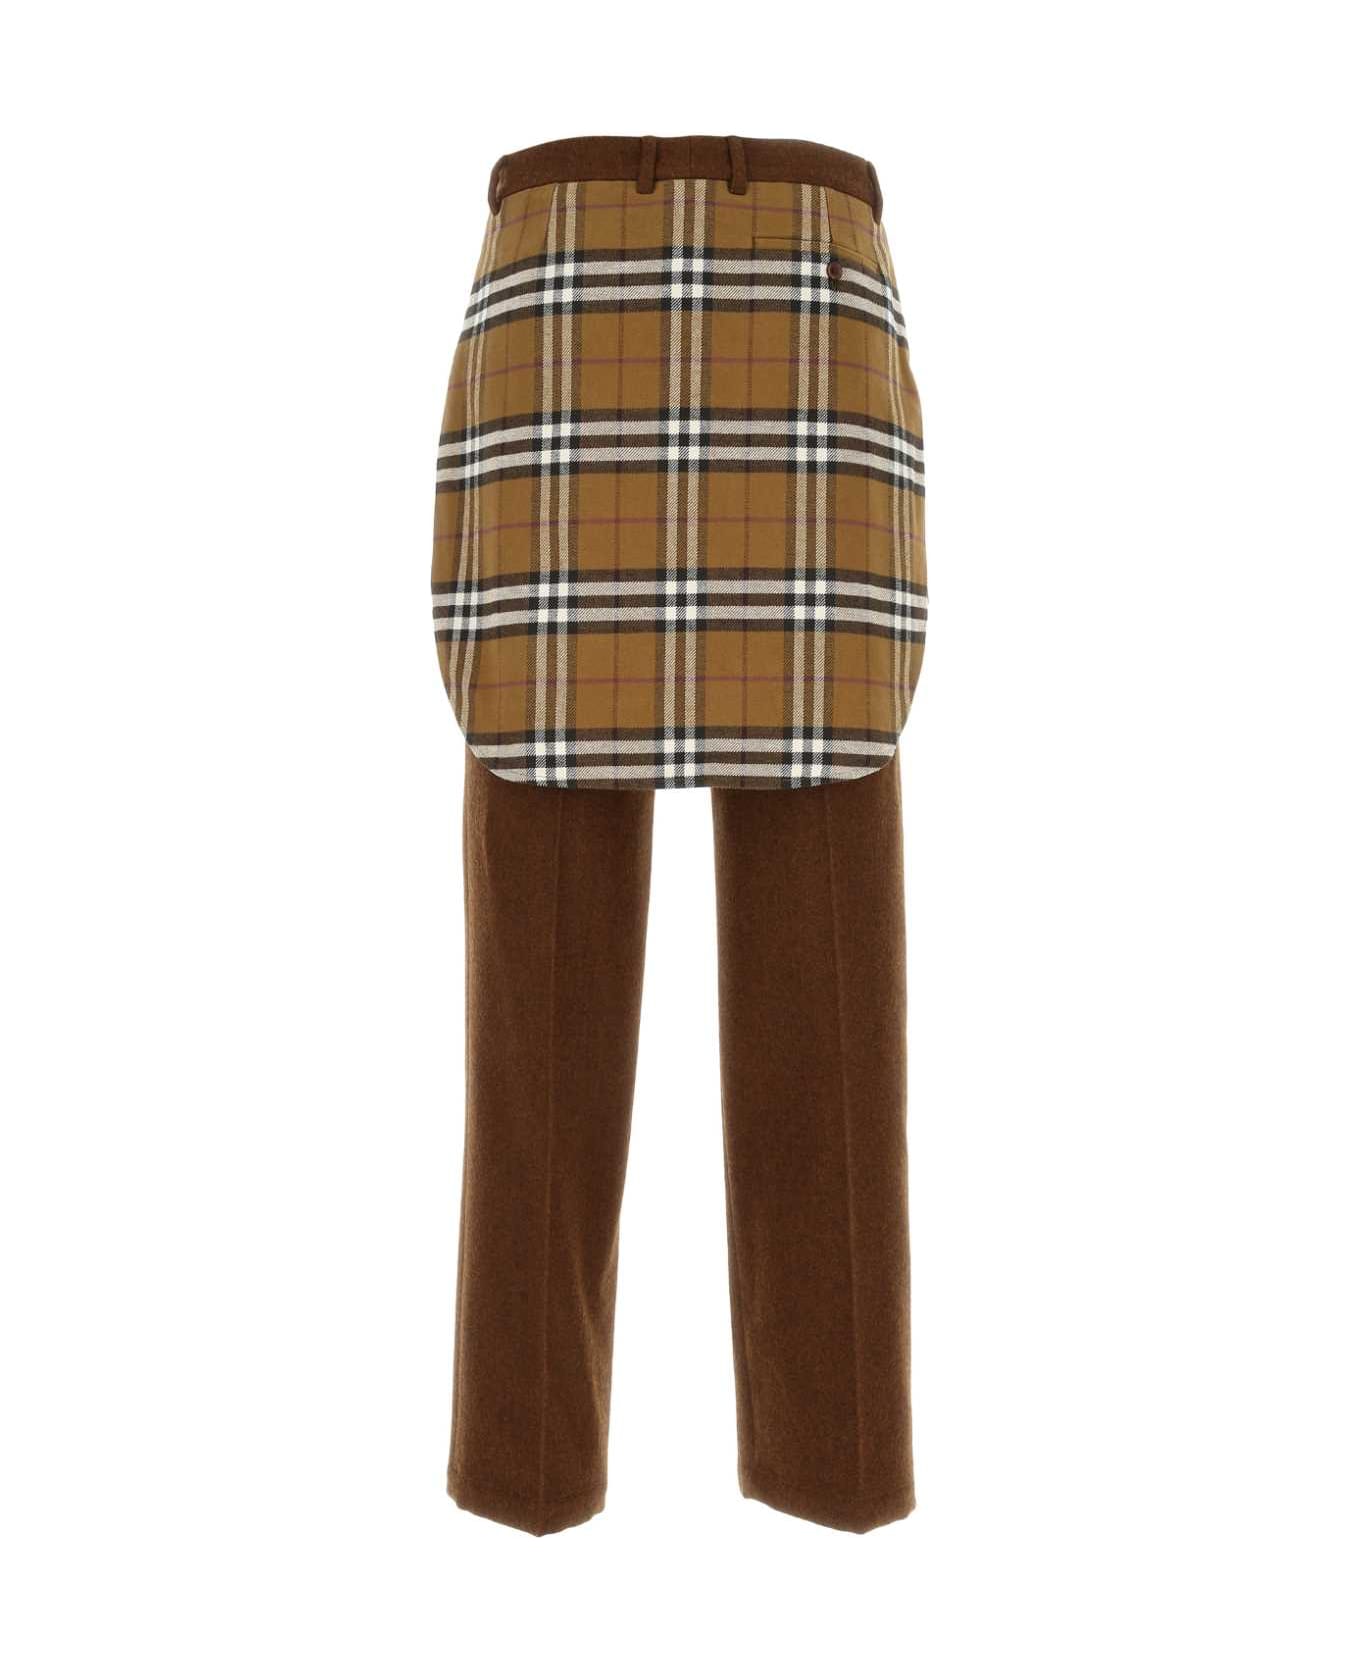 Burberry Brown Wool Pant - B2843